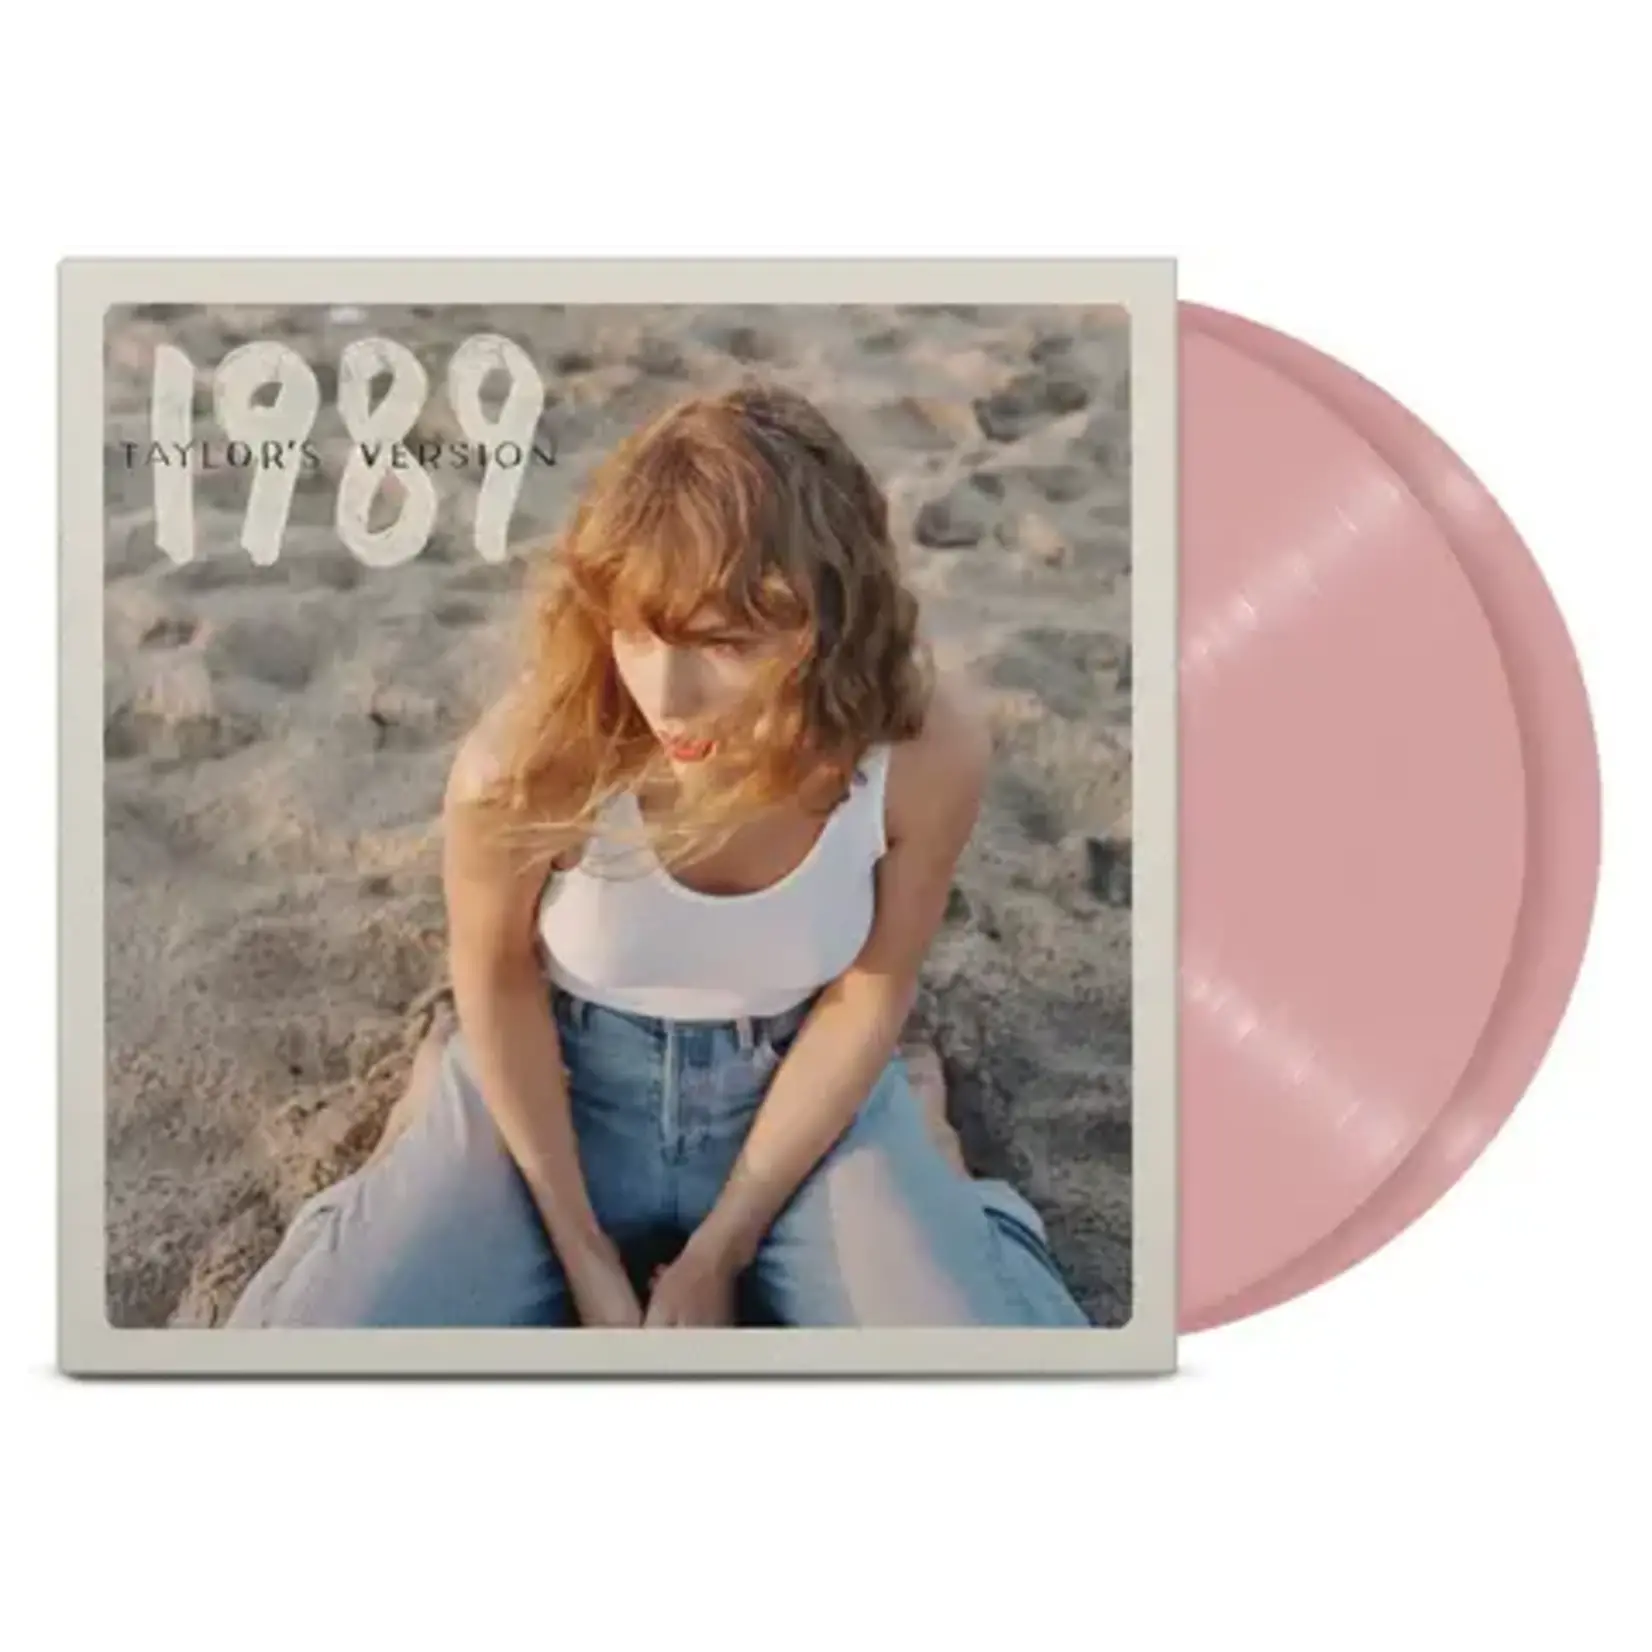 [New] Swift, Taylor: 1989 - Taylor's Version (2LP, rose vinyl) [REPUBLIC]